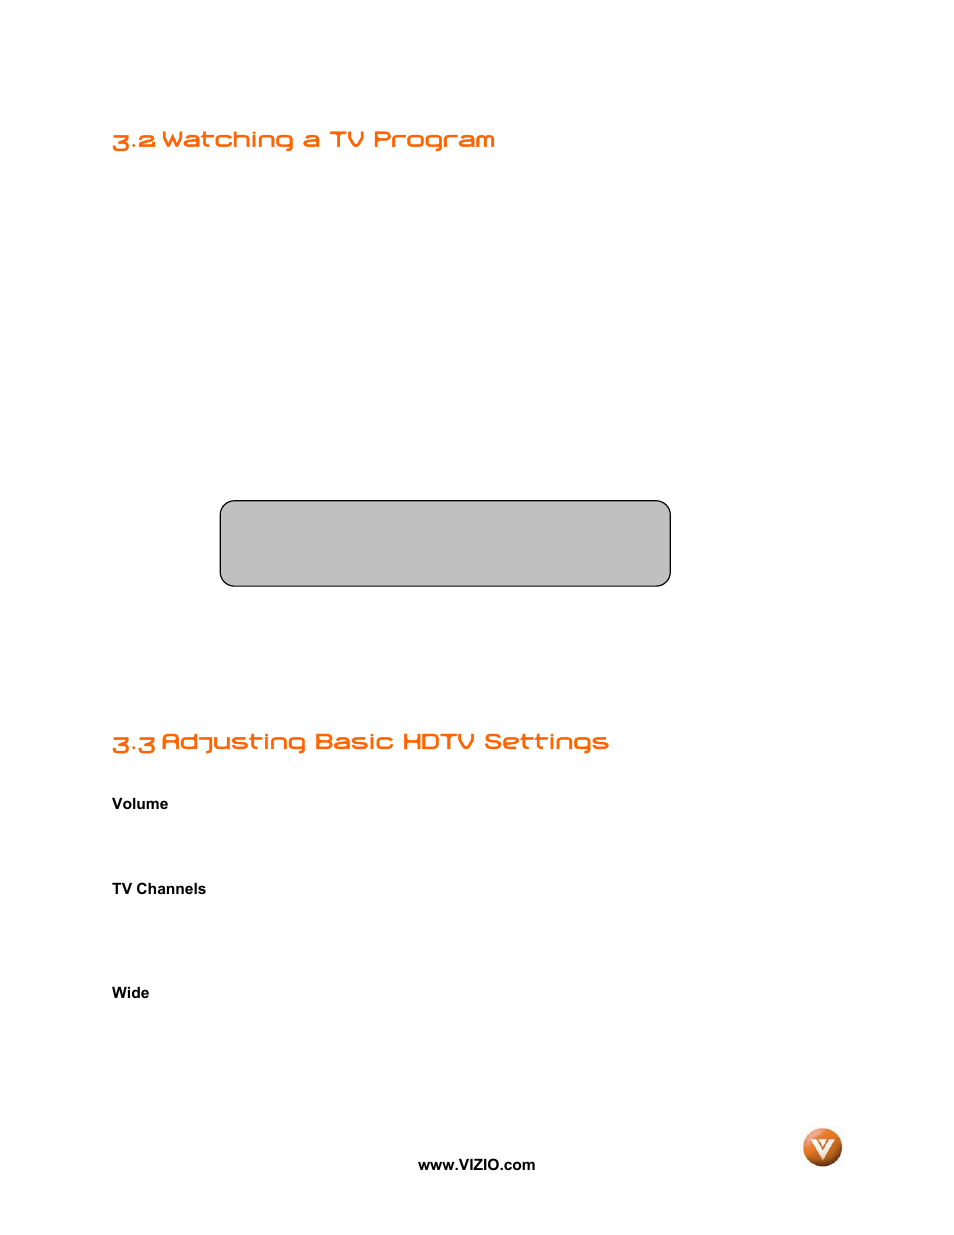 2 watching a tv program, 3 adjusting basic hdtv settings | Vizio VP42 User Manual | Page 29 / 57